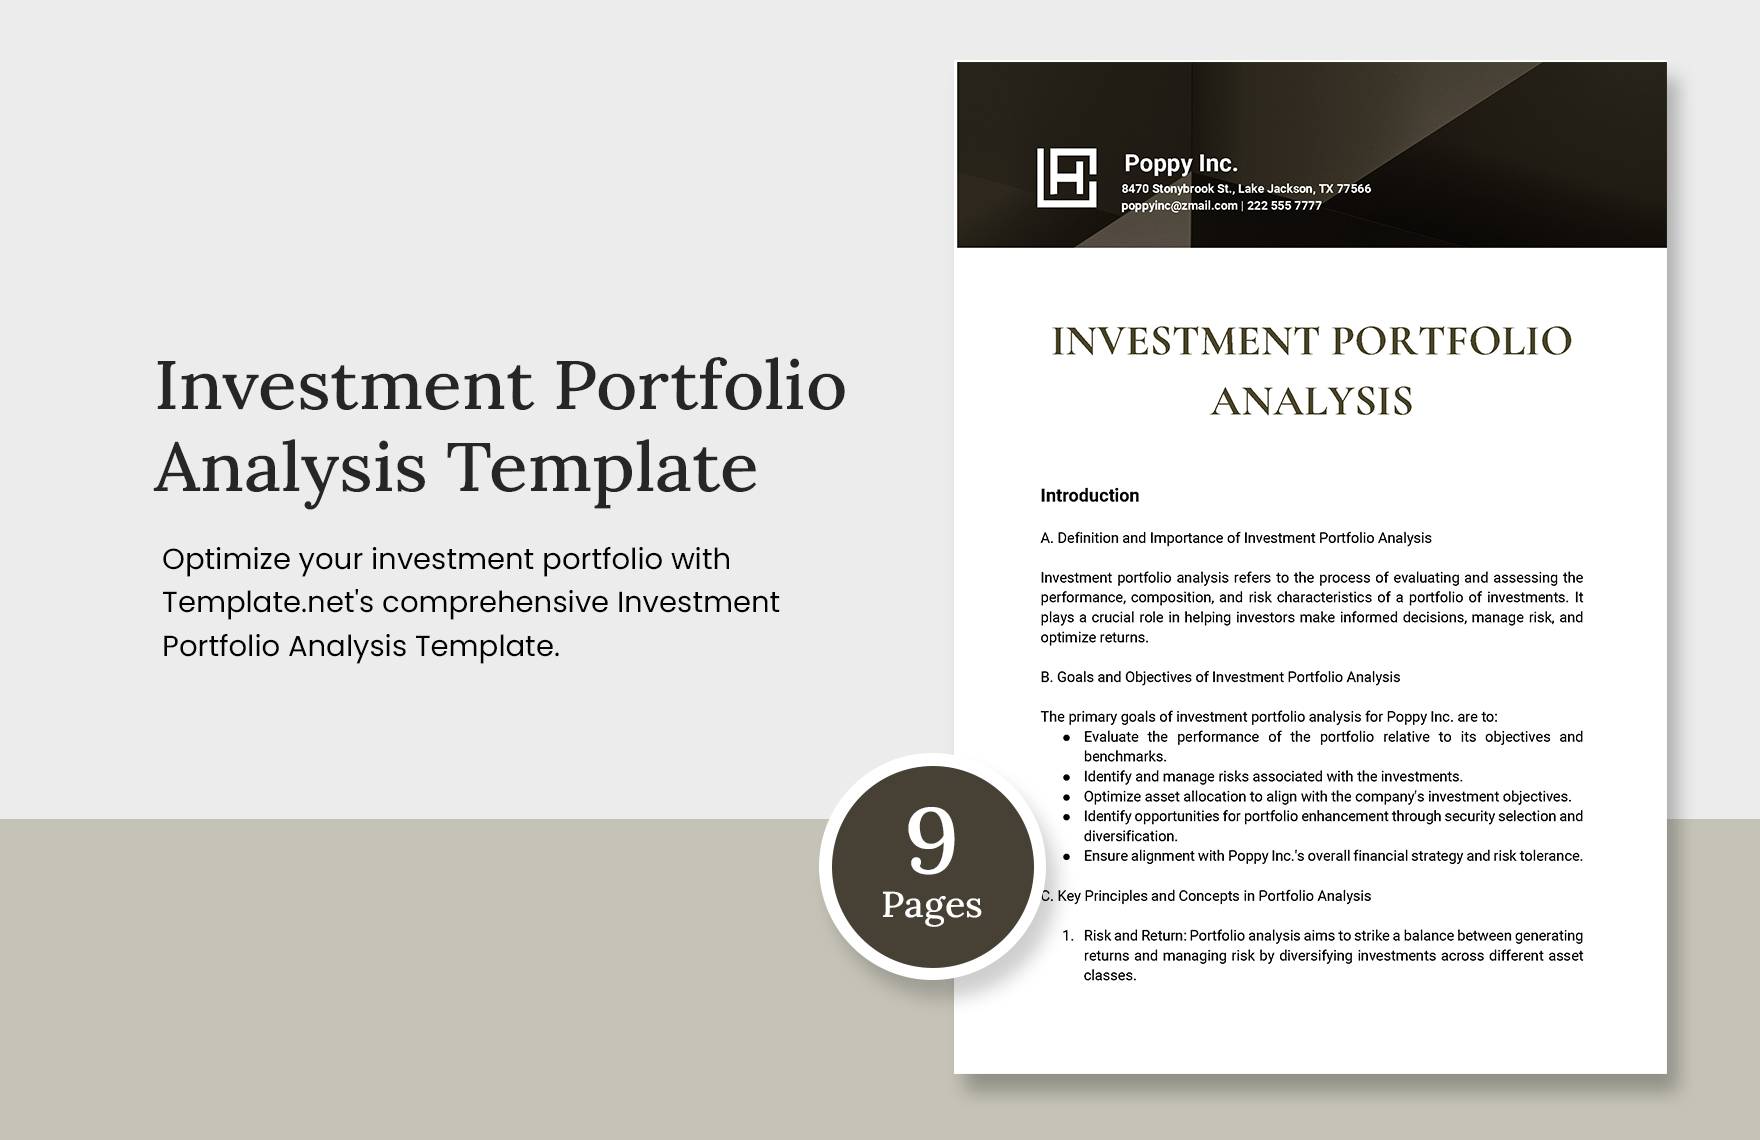 Investment Portfolio Analysis Template in Word, Google Docs